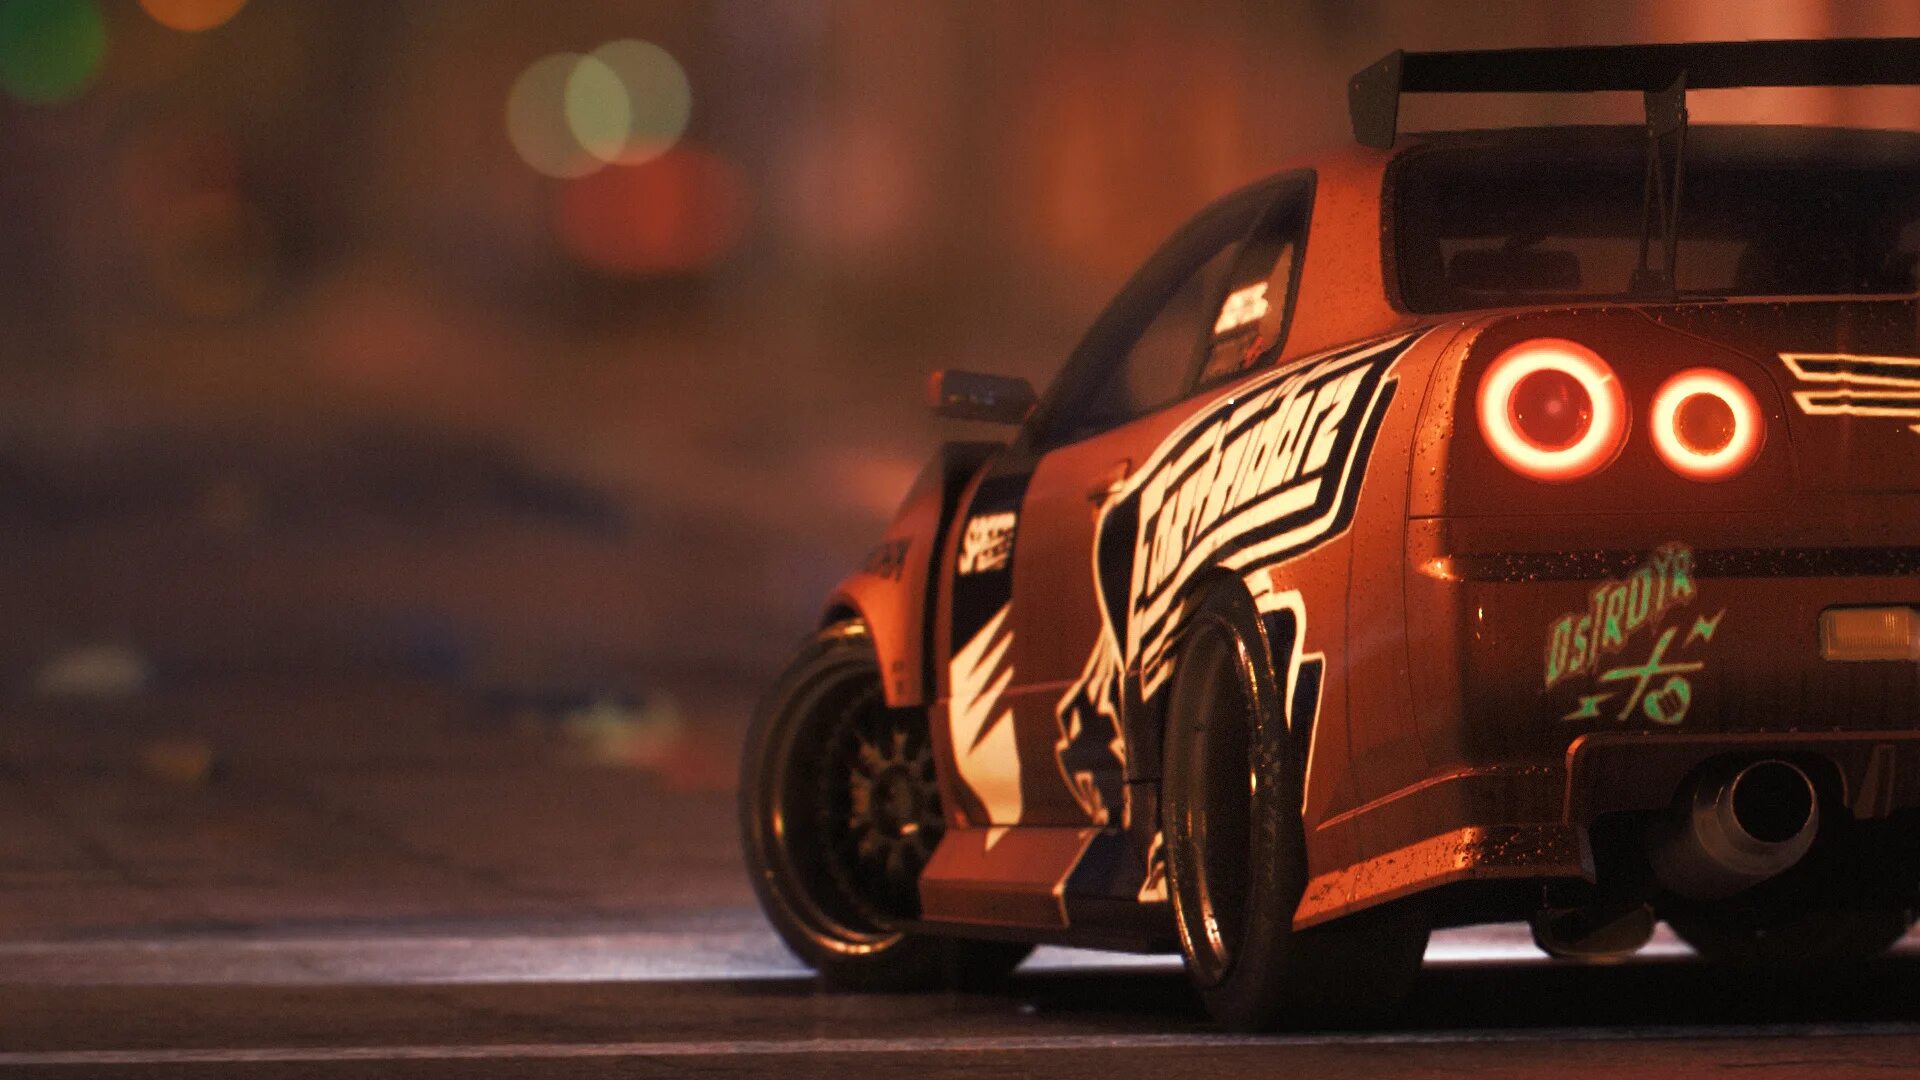 Спид кар. NFS 2015 Эдди ЧЕЛЛЕНДЖ. Нид фор СПИД 2015. Need for Speed Underground 2015. Need for Speed (игра, 2015).